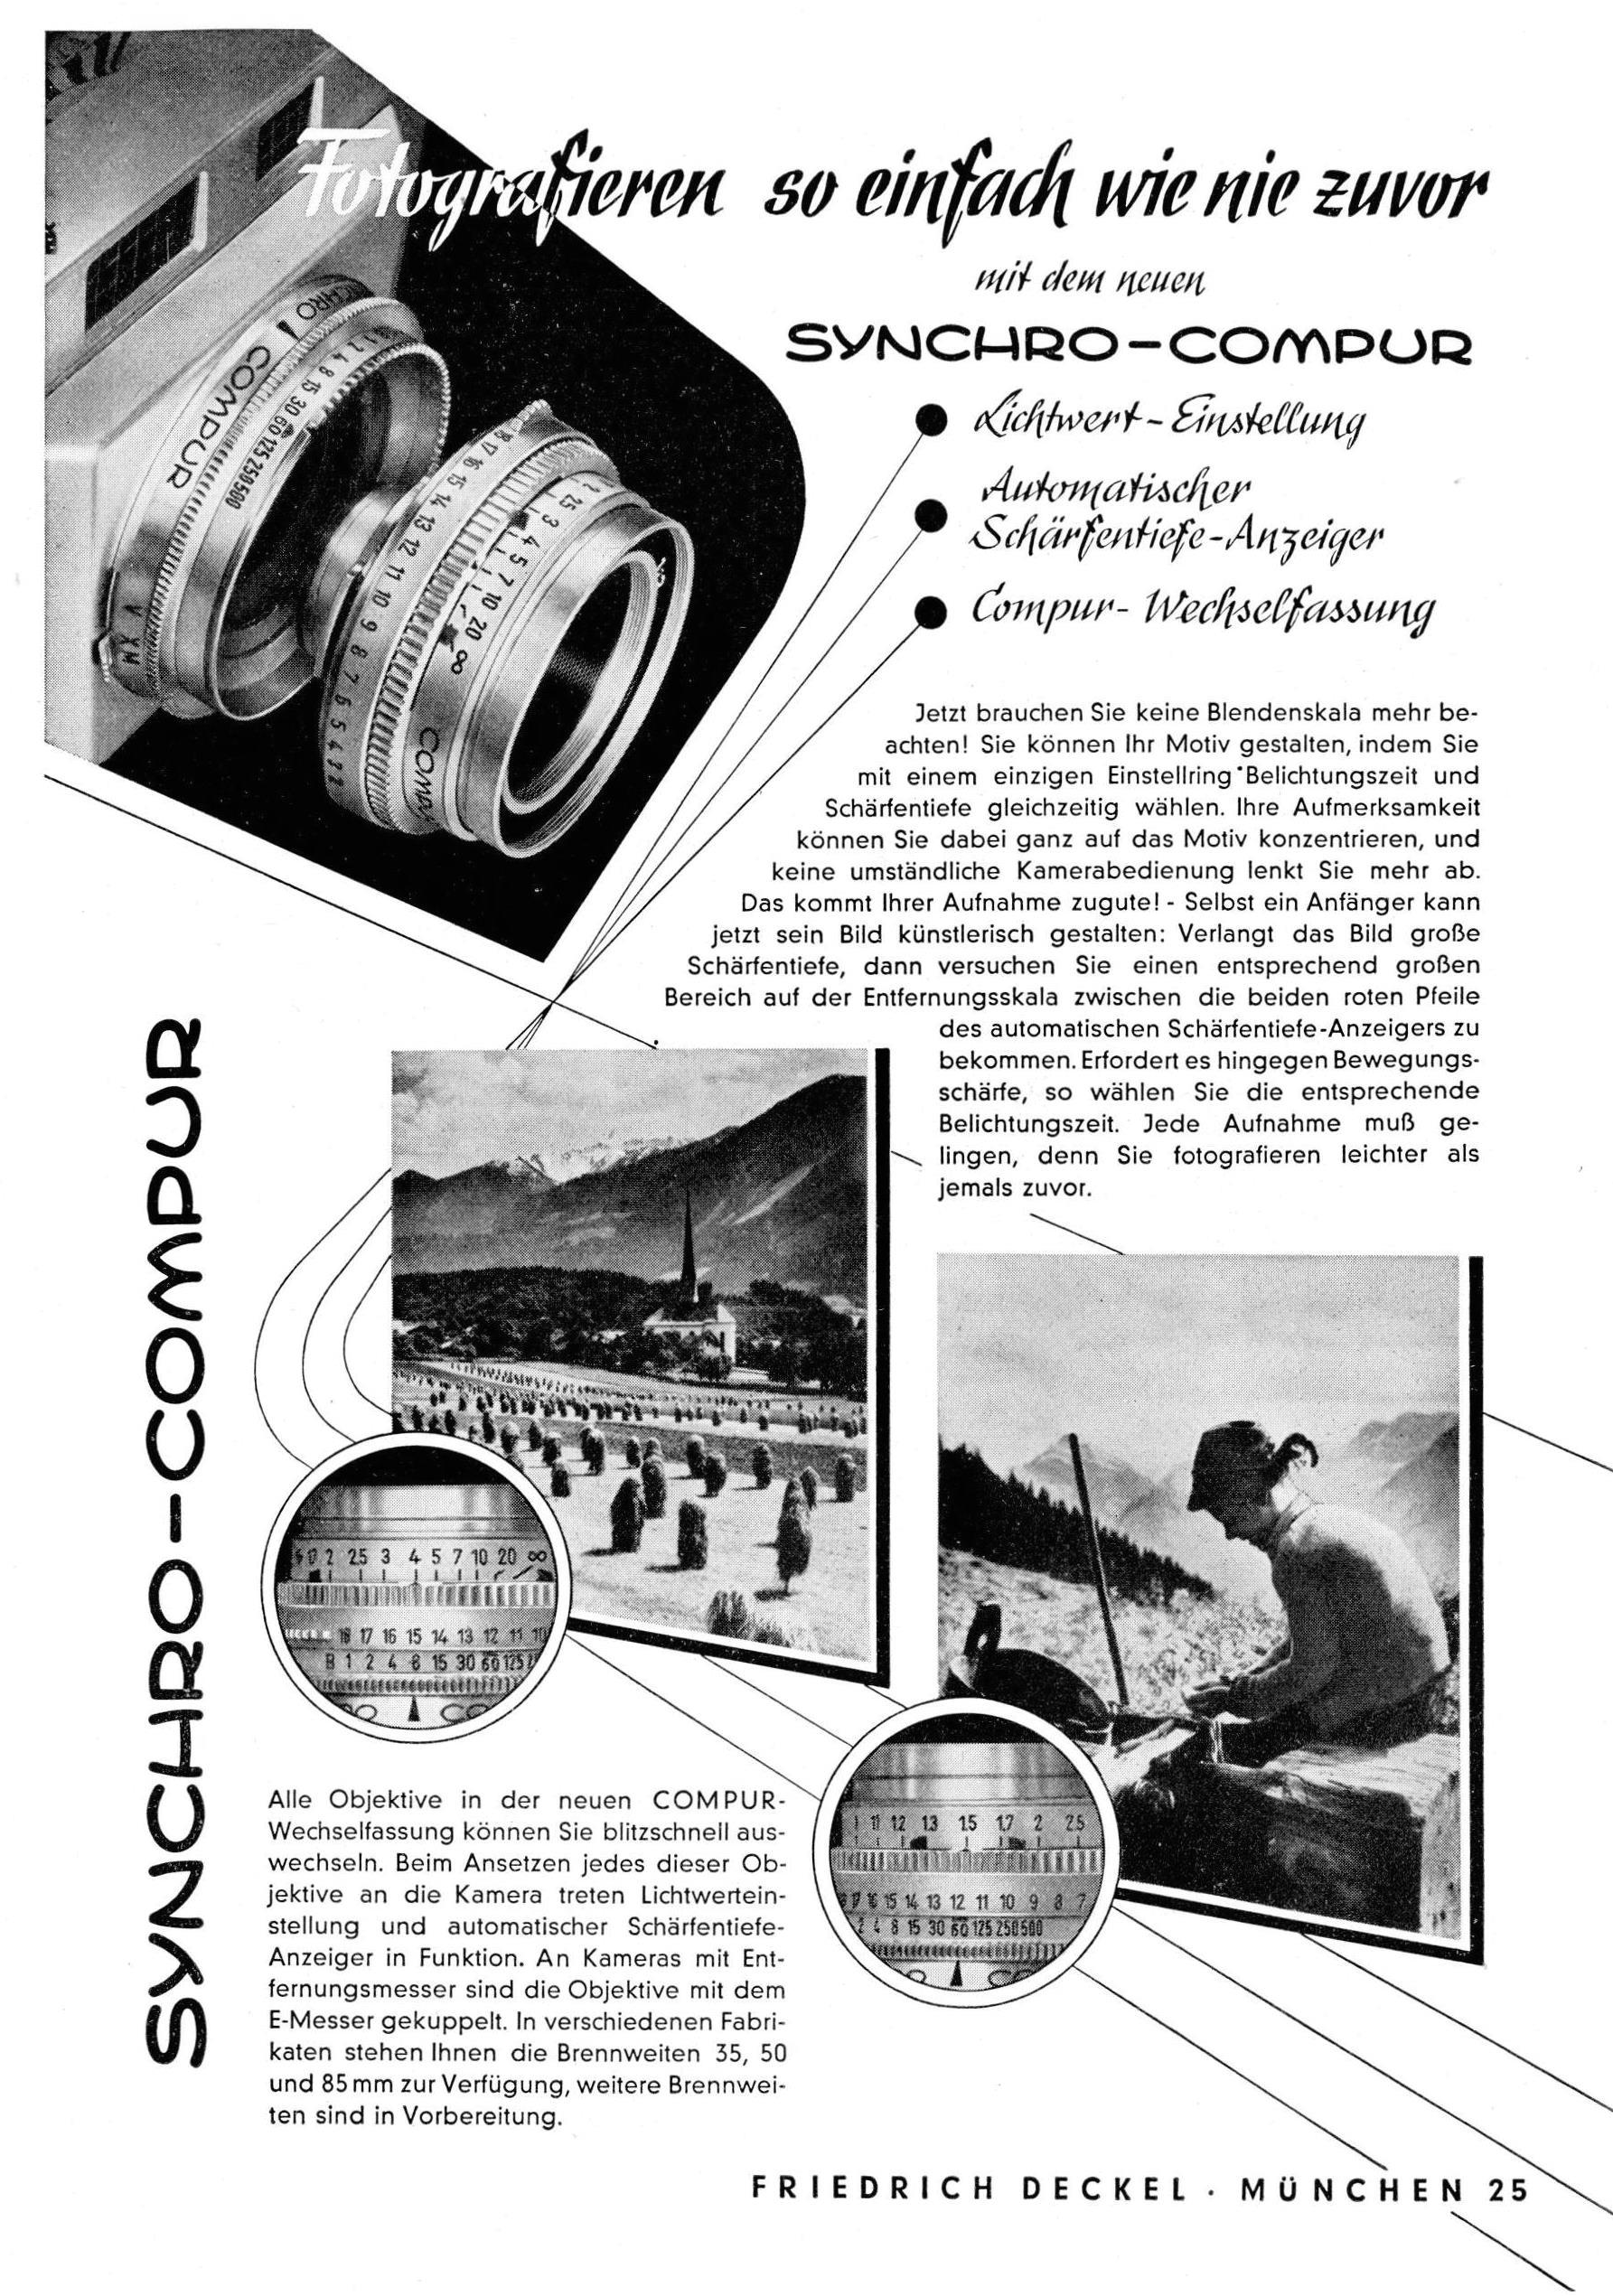 Synchro-Compur 1956 0.jpg